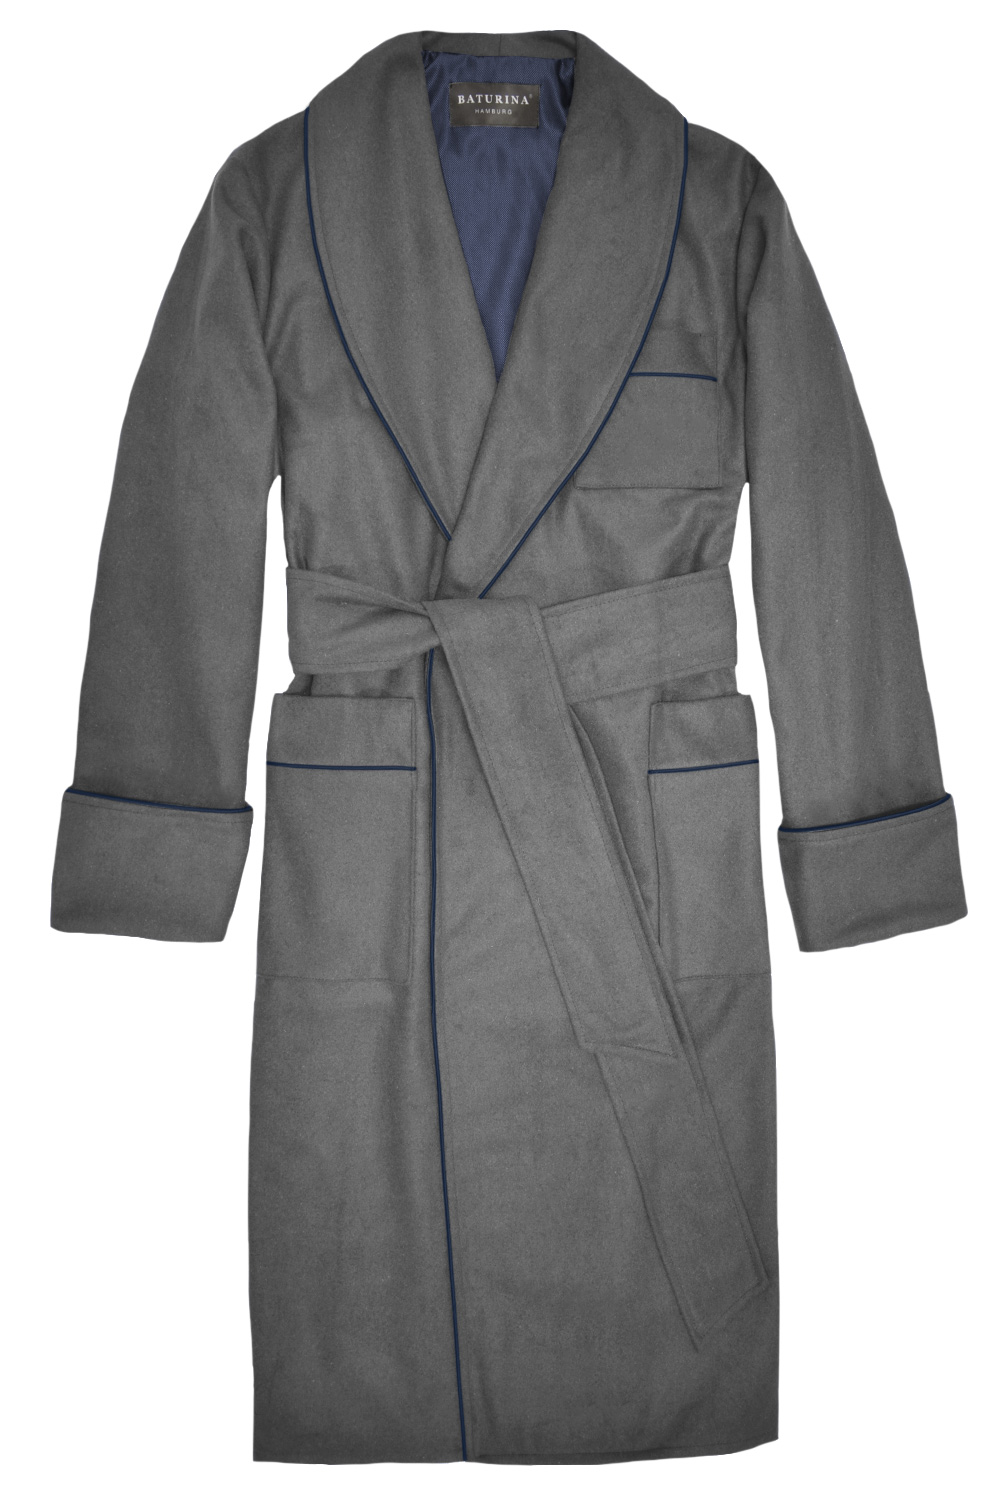 Elevate Your Comfort: Opt For A Custom Floor Length Dressing Gown |  Baturina Homewear